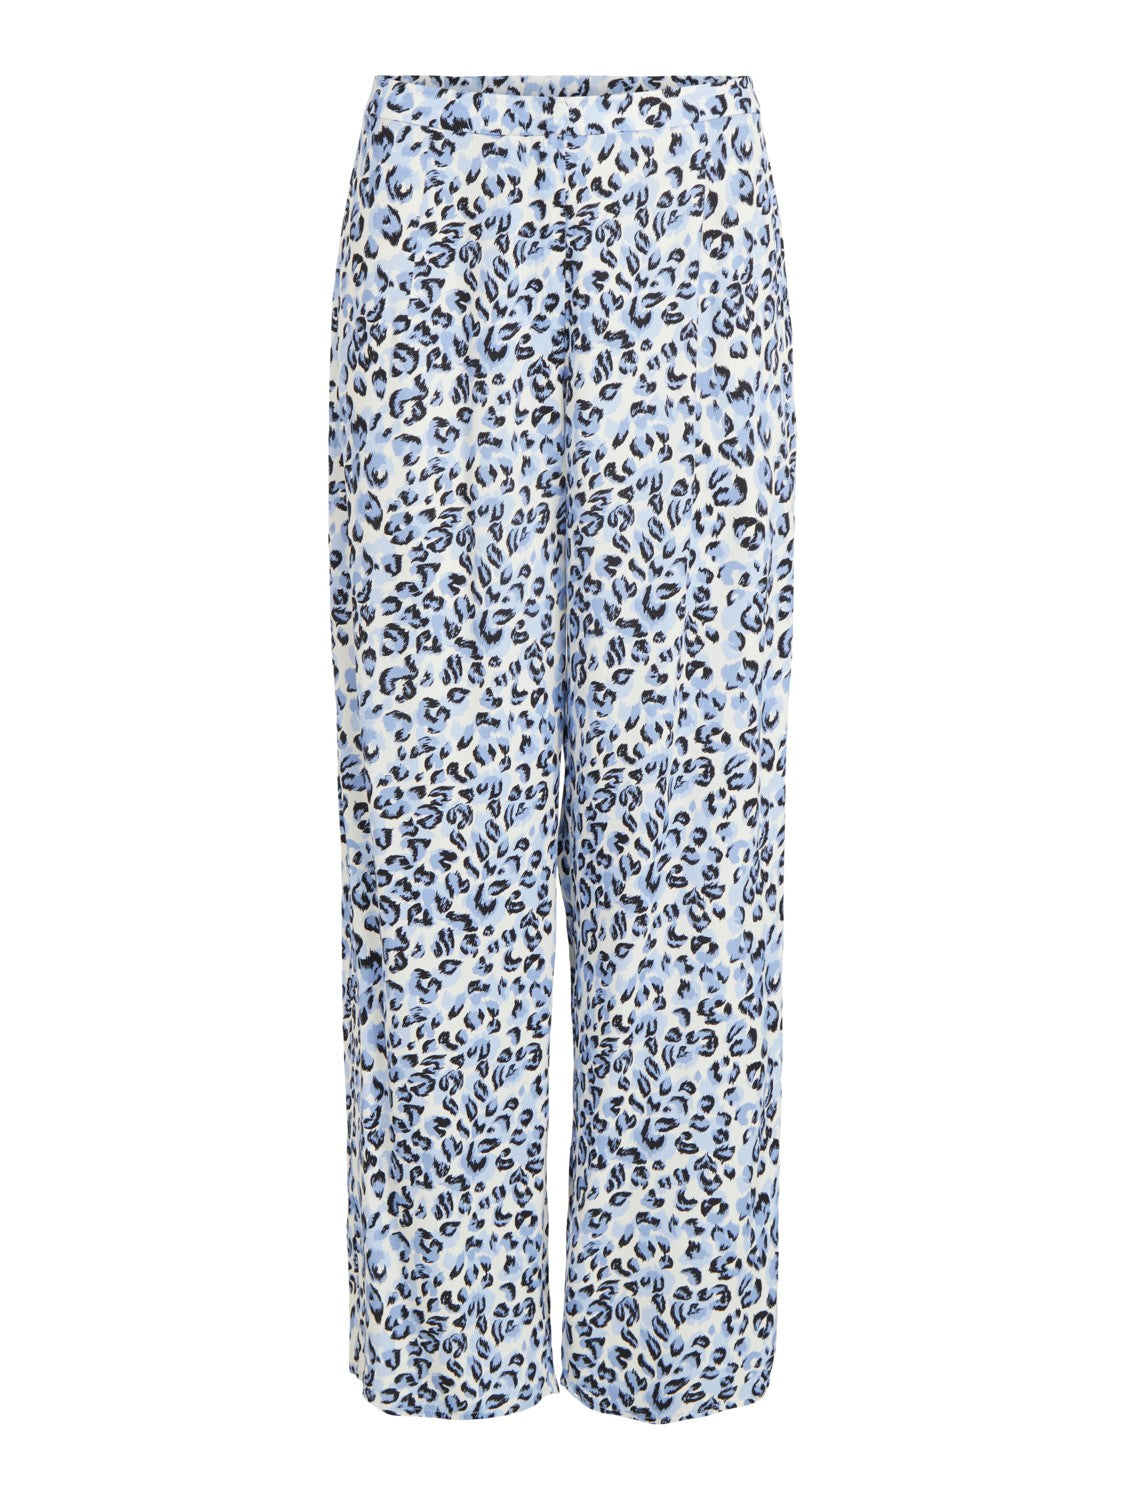 Vimoras Trousers (Blue Leopard)